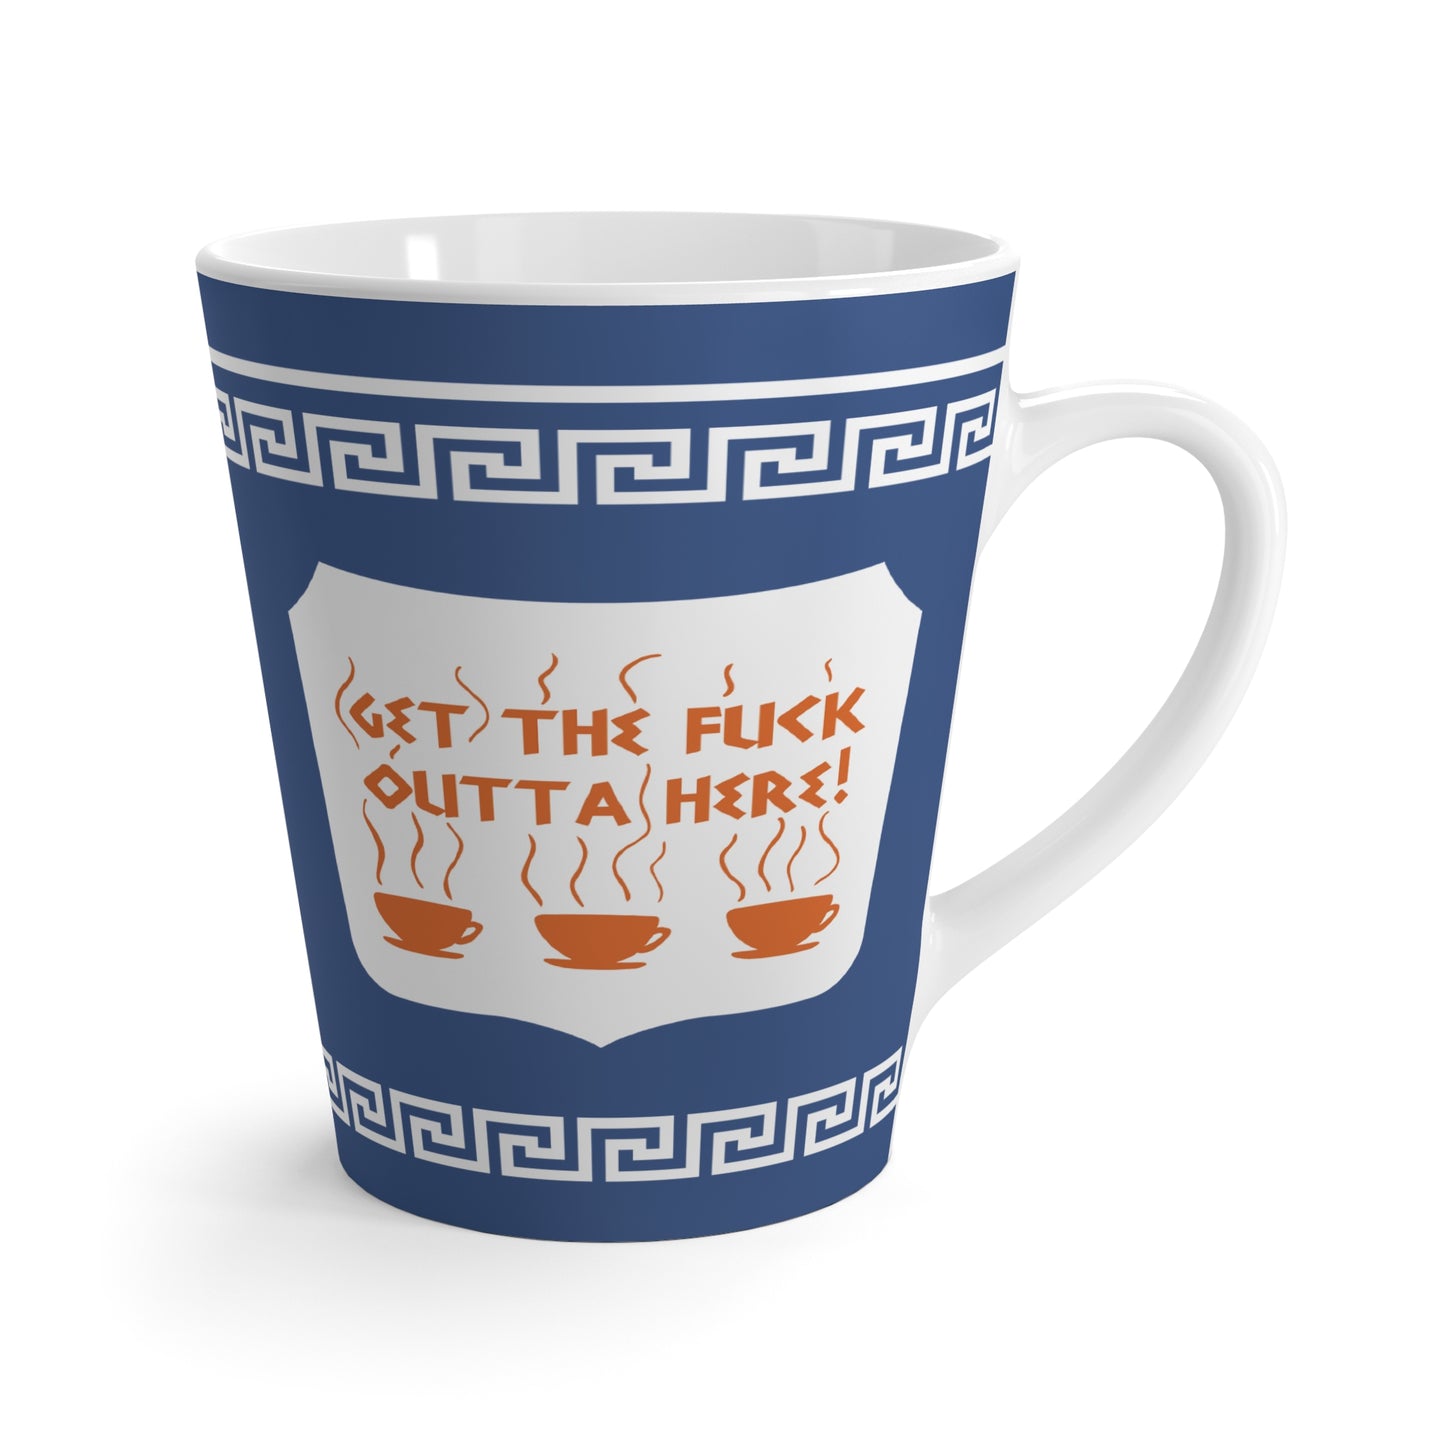 Accurate NY Coffee mug